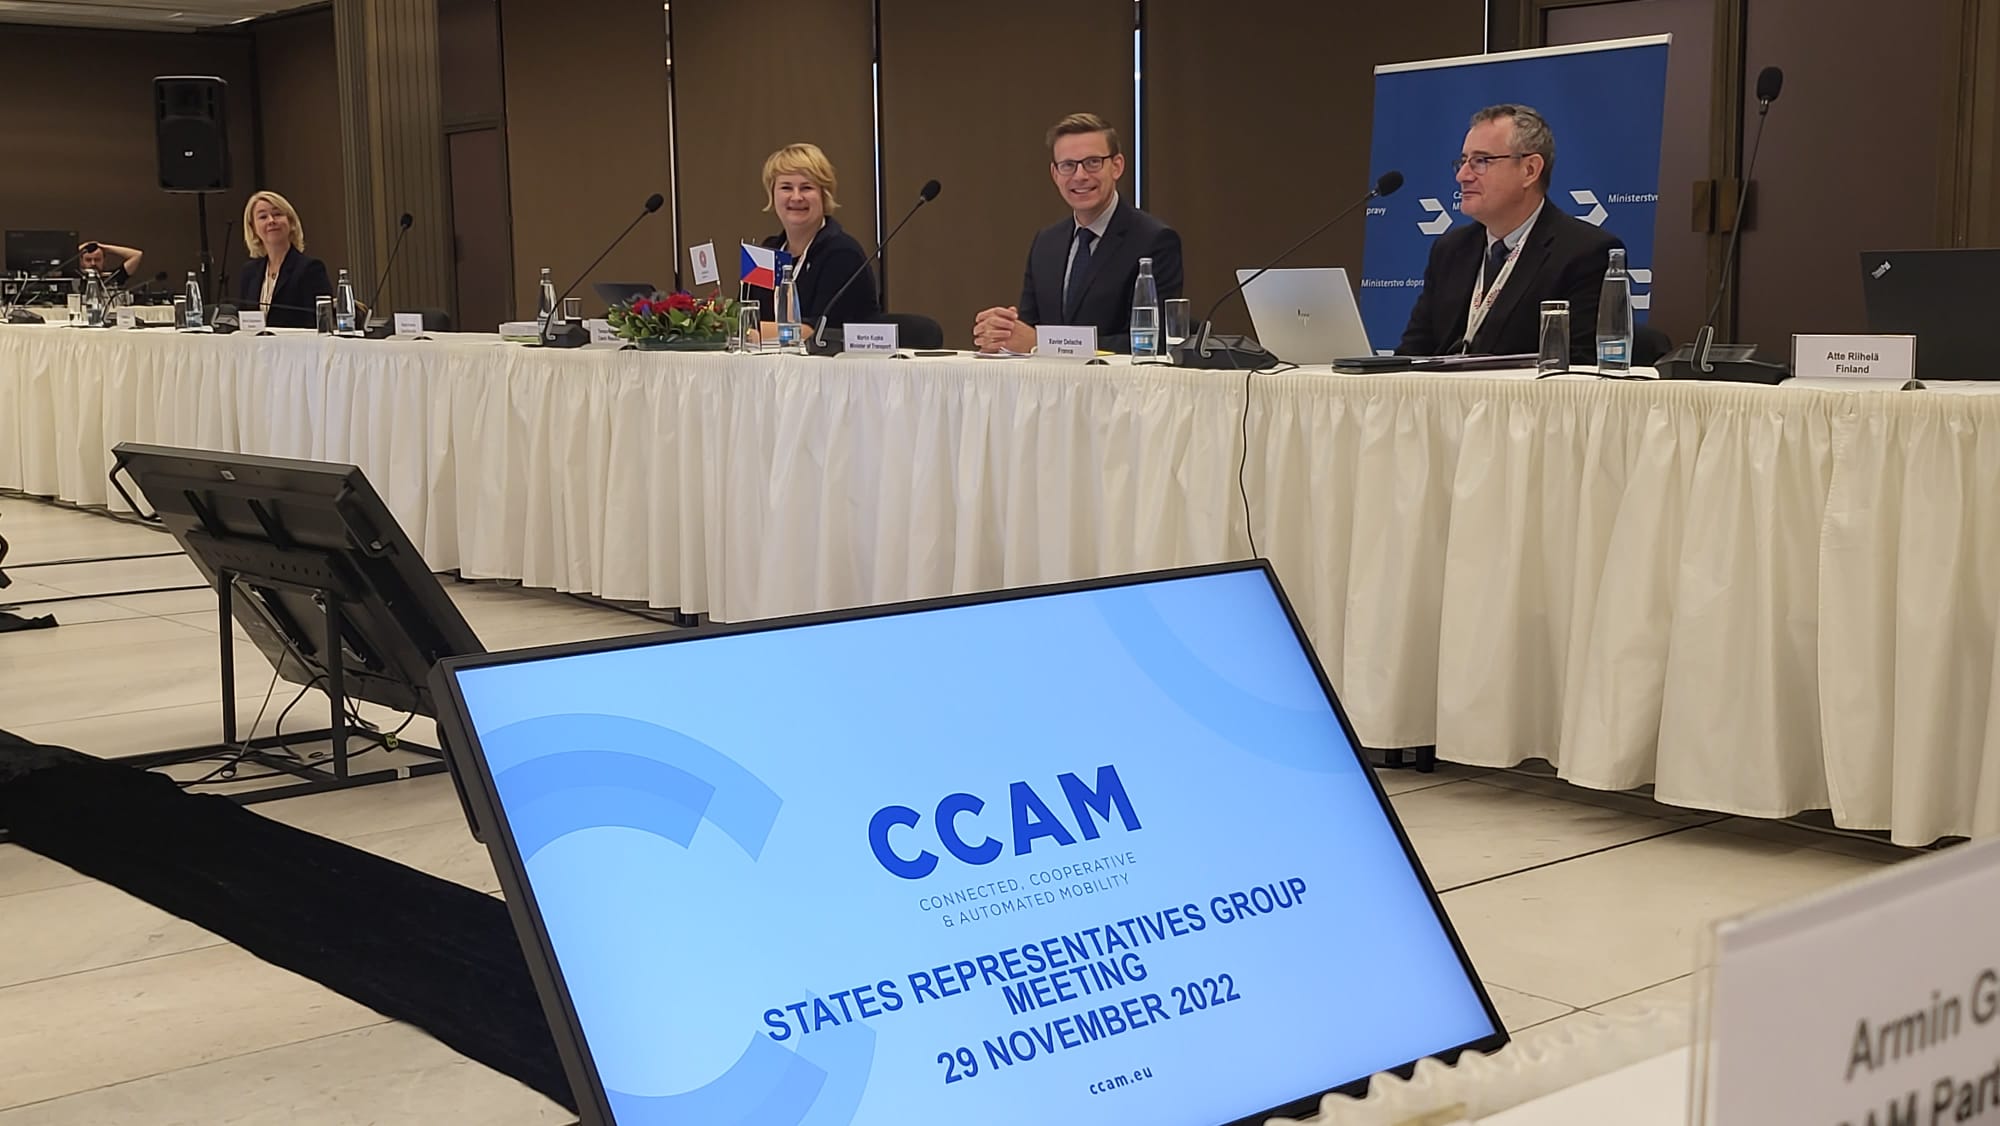 CCAM States Representatives Group meeting on 29 November